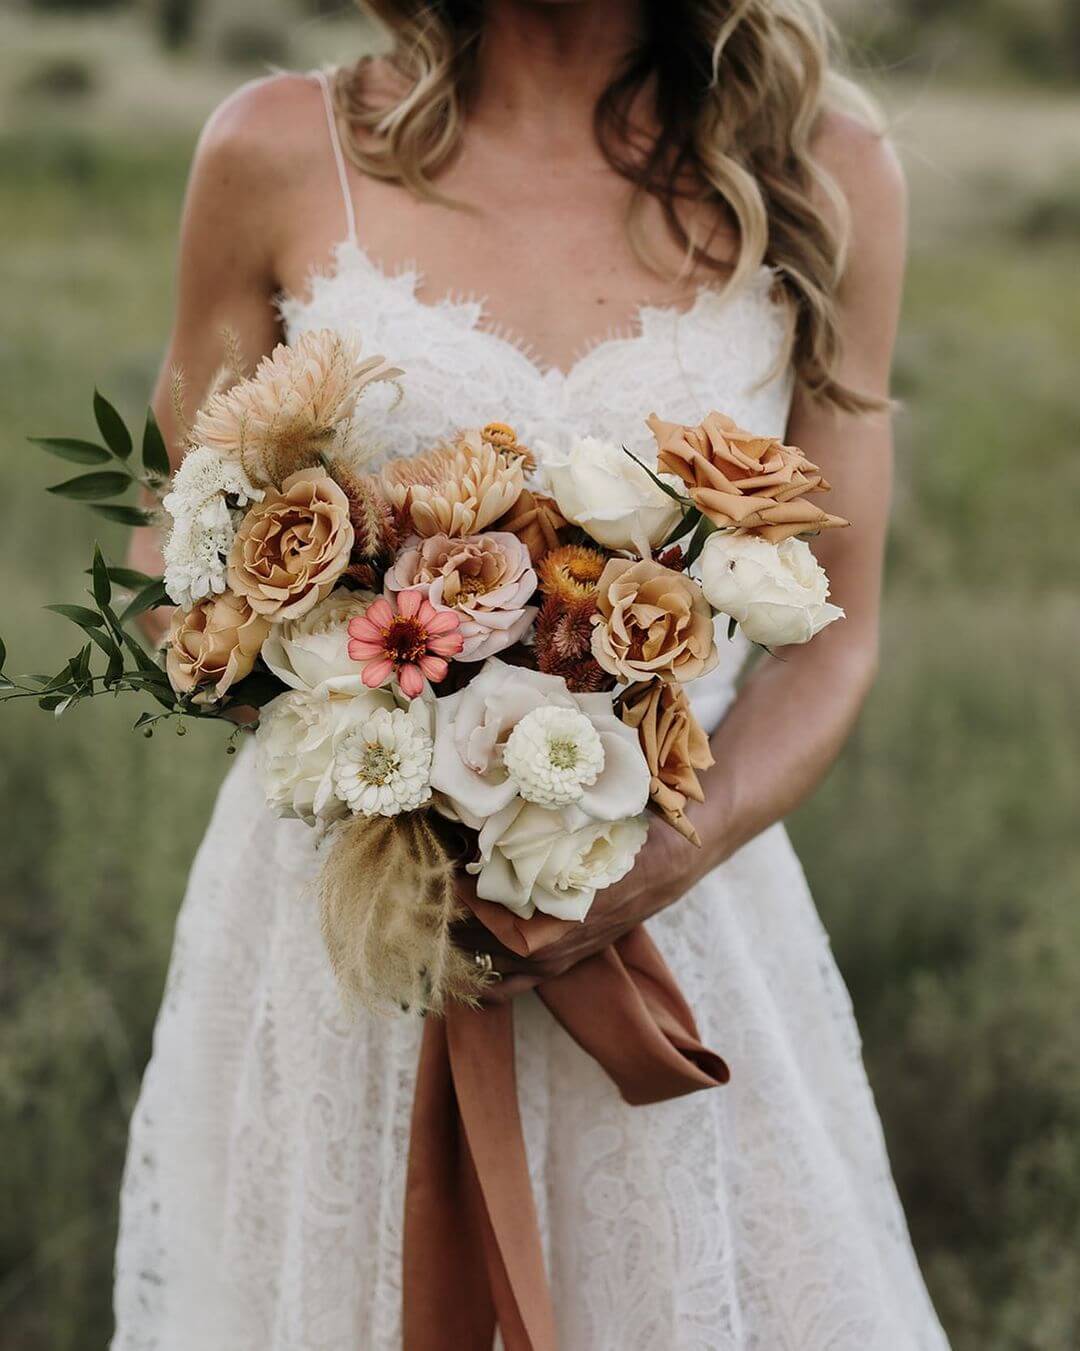 A Boho Style Wedding Bouquet